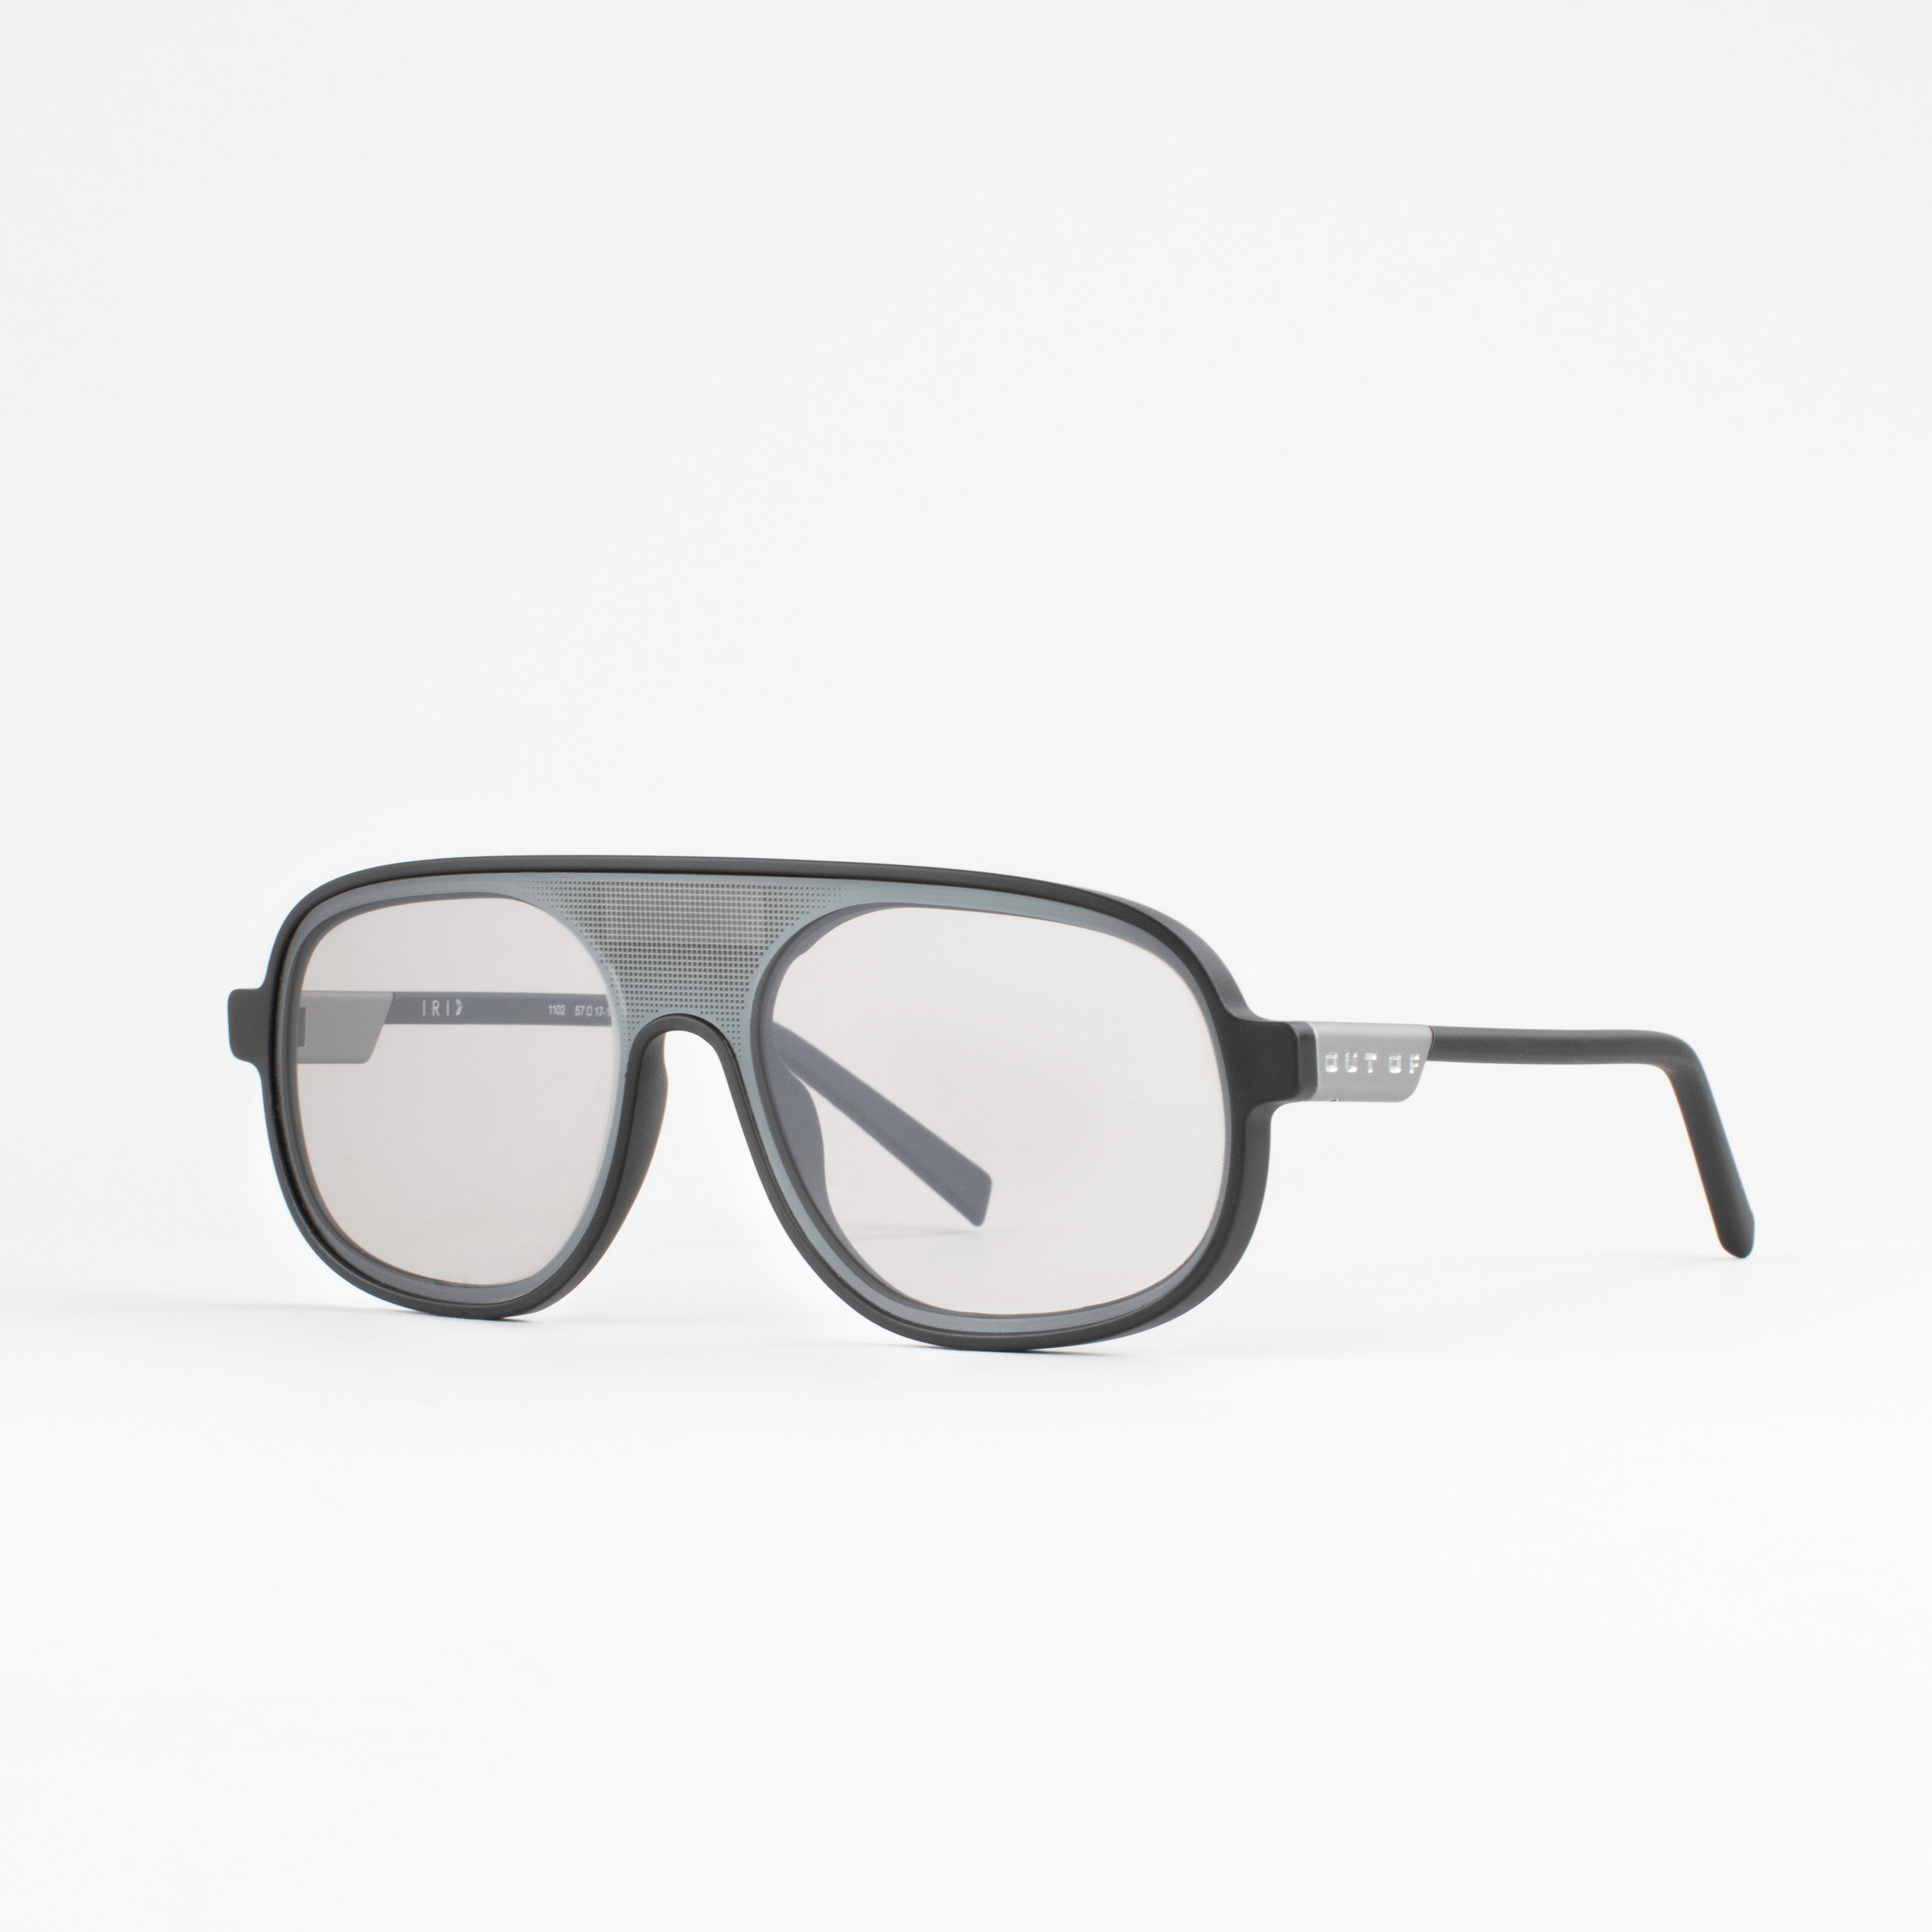 V-1 sunglasses with IRID X-10 lens color: Matt black/silver